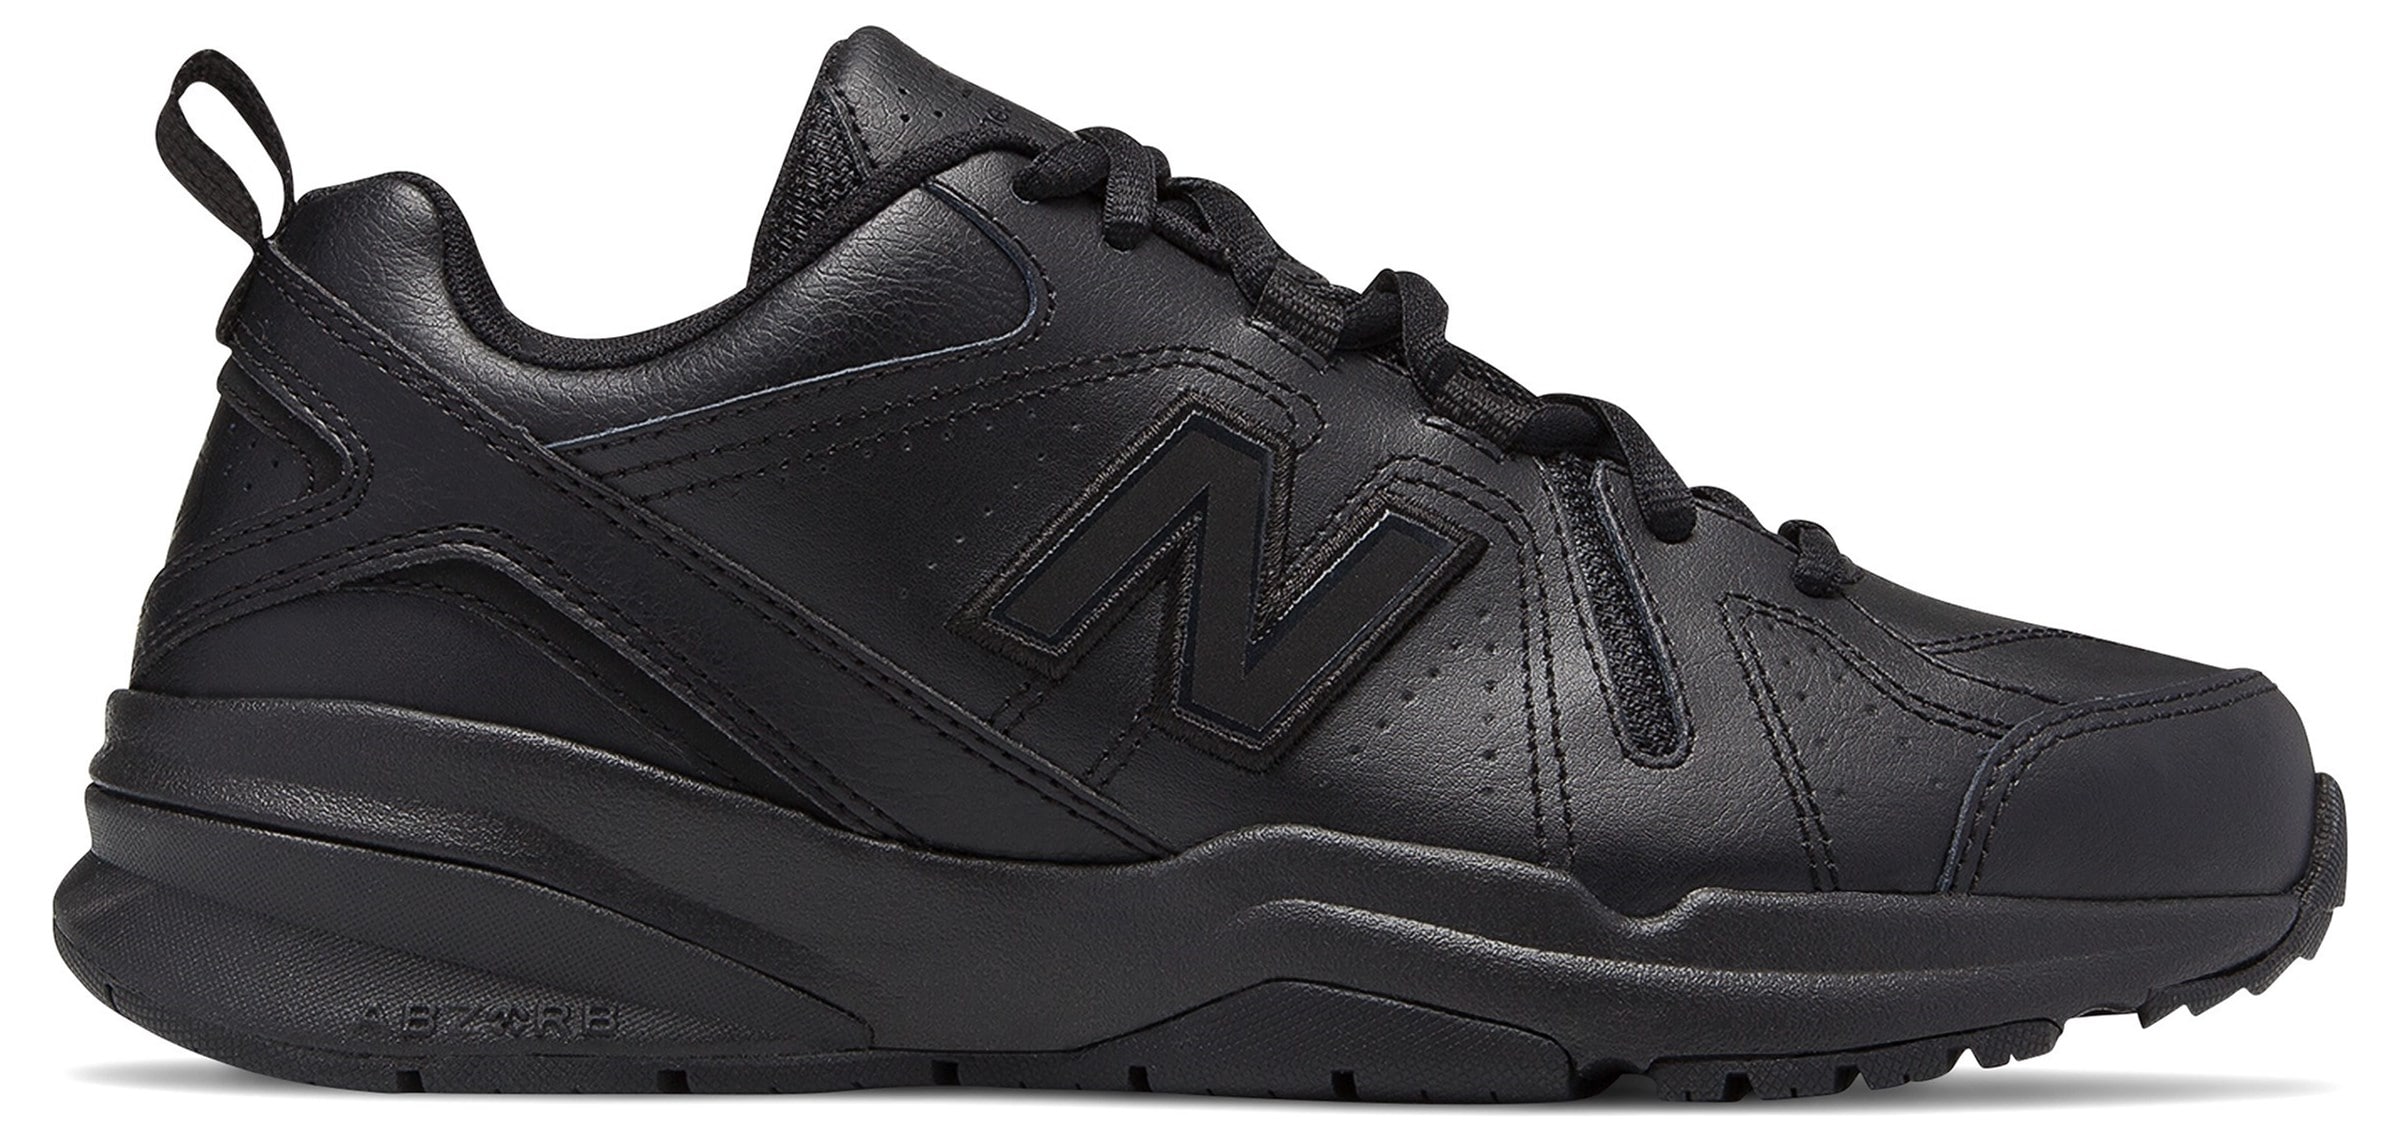 New Balance Men's 608v5 Black/Black Athletic Lace Up Shoes, 42% OFF